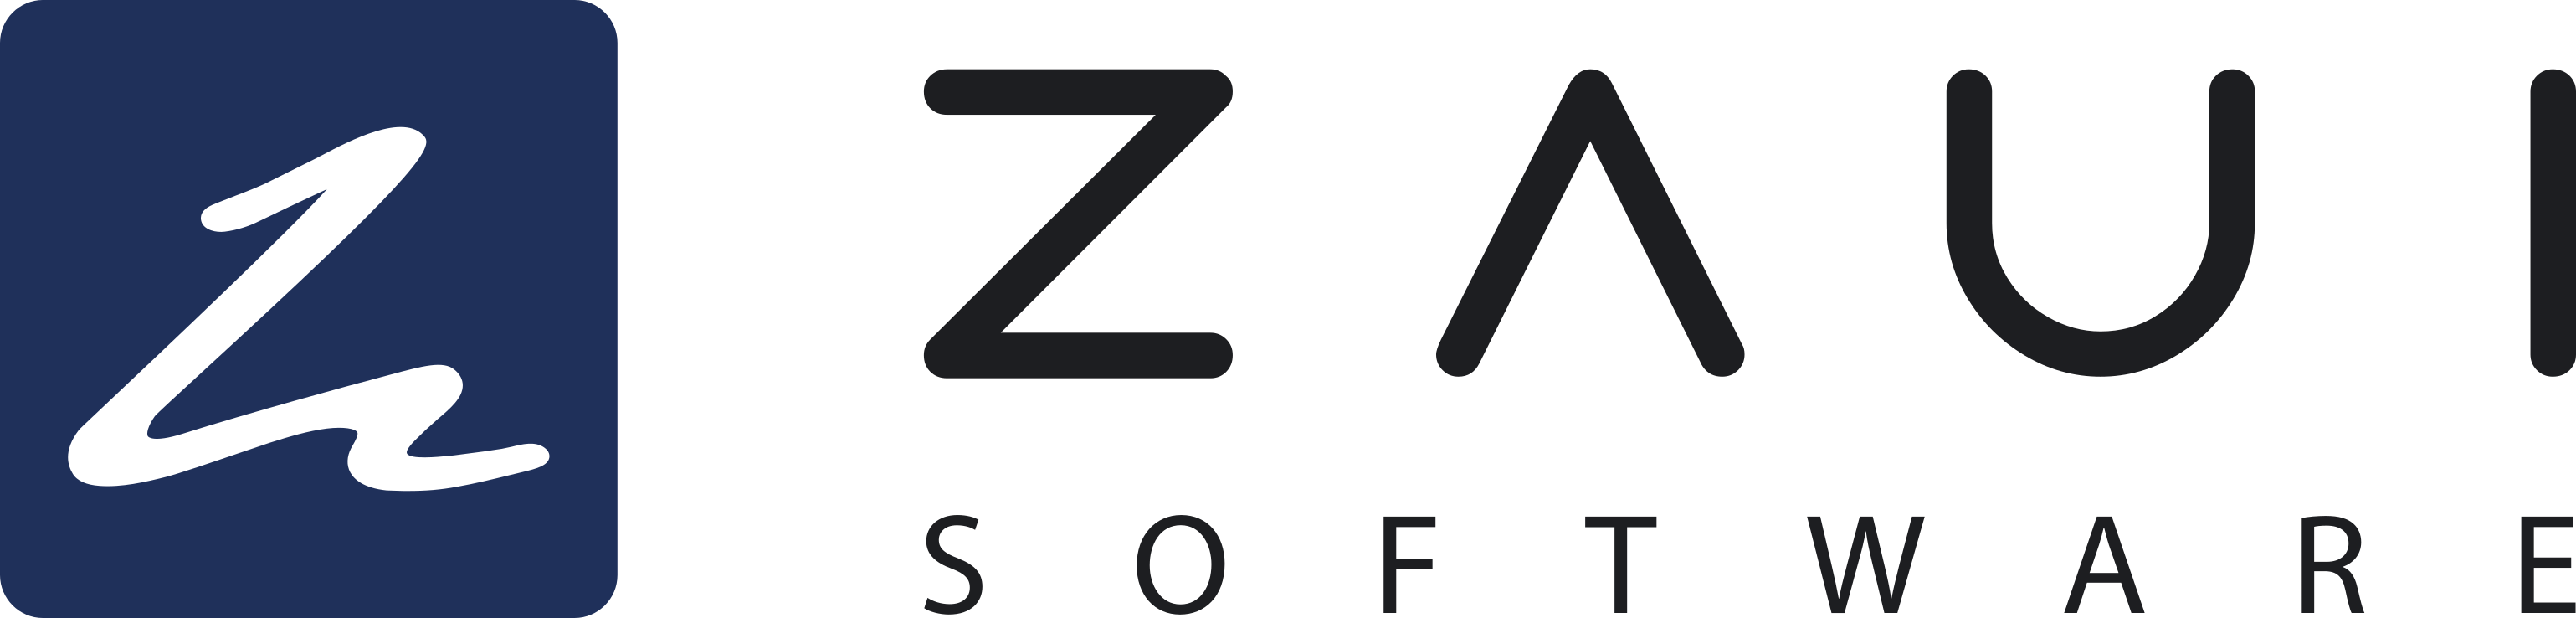 zaui logo